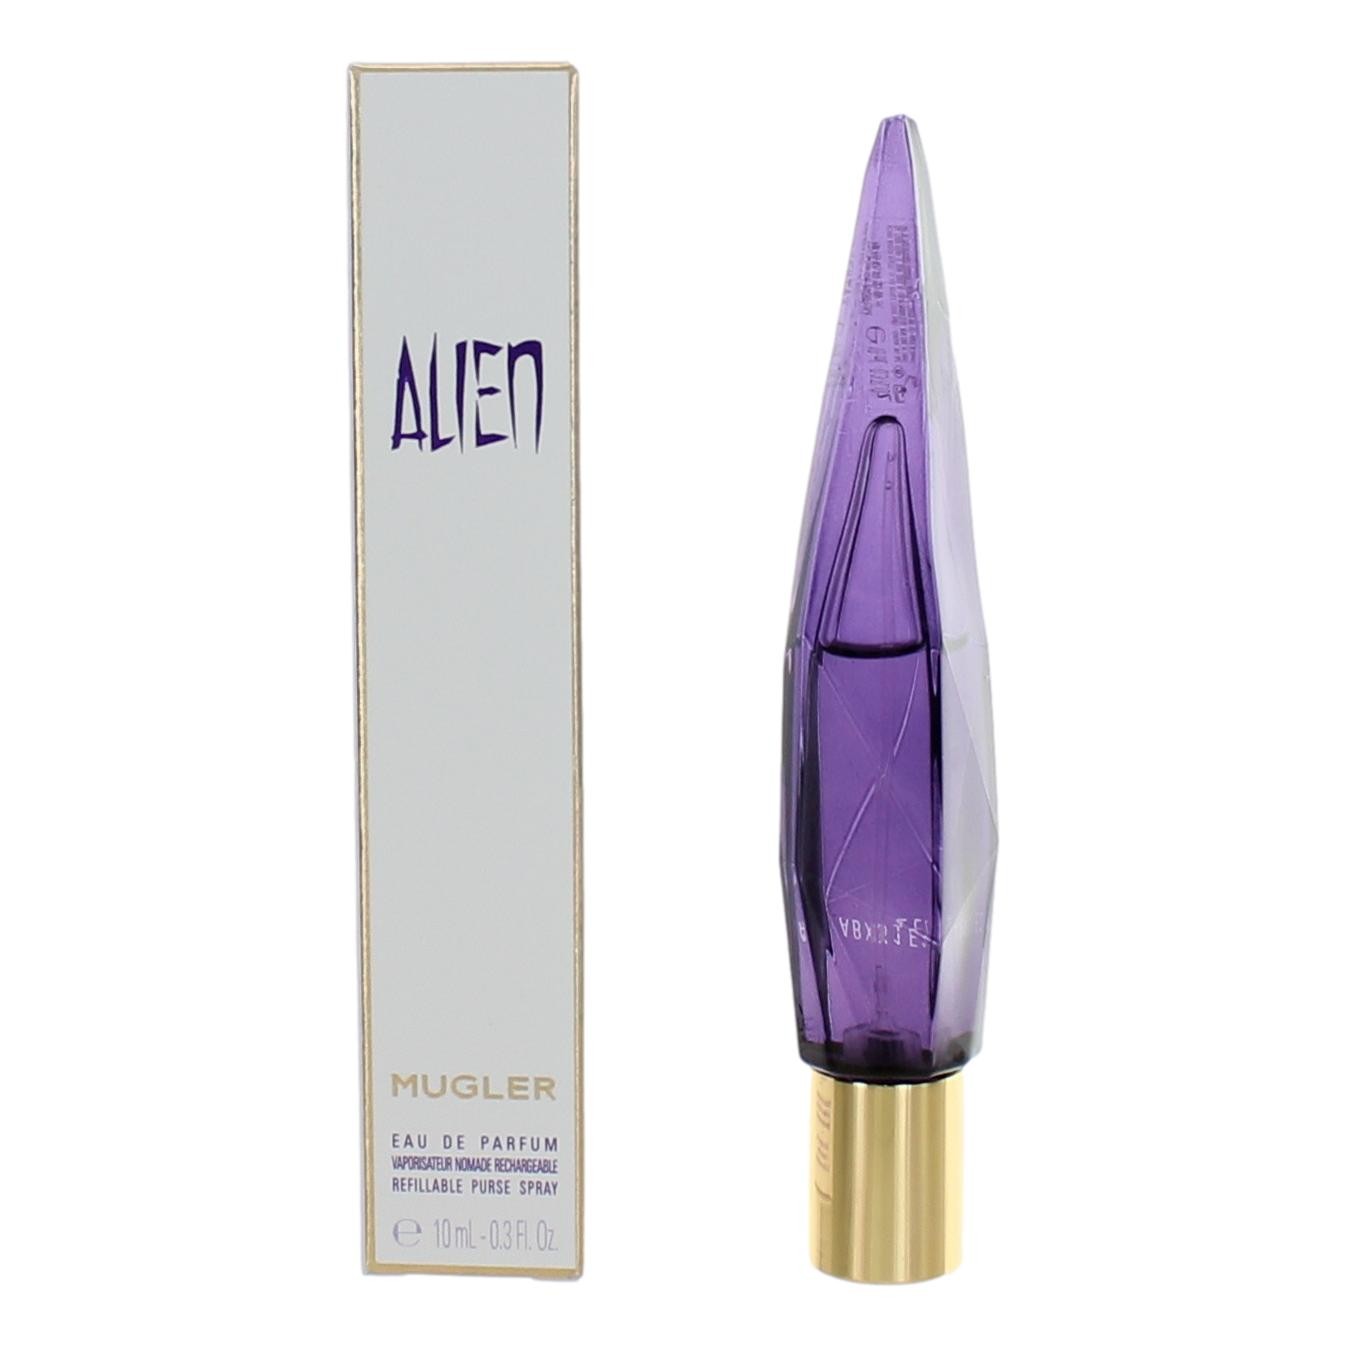 Alien by Thierry Mugler .3 oz Eau de Parfum Refillable purse spray for Women.